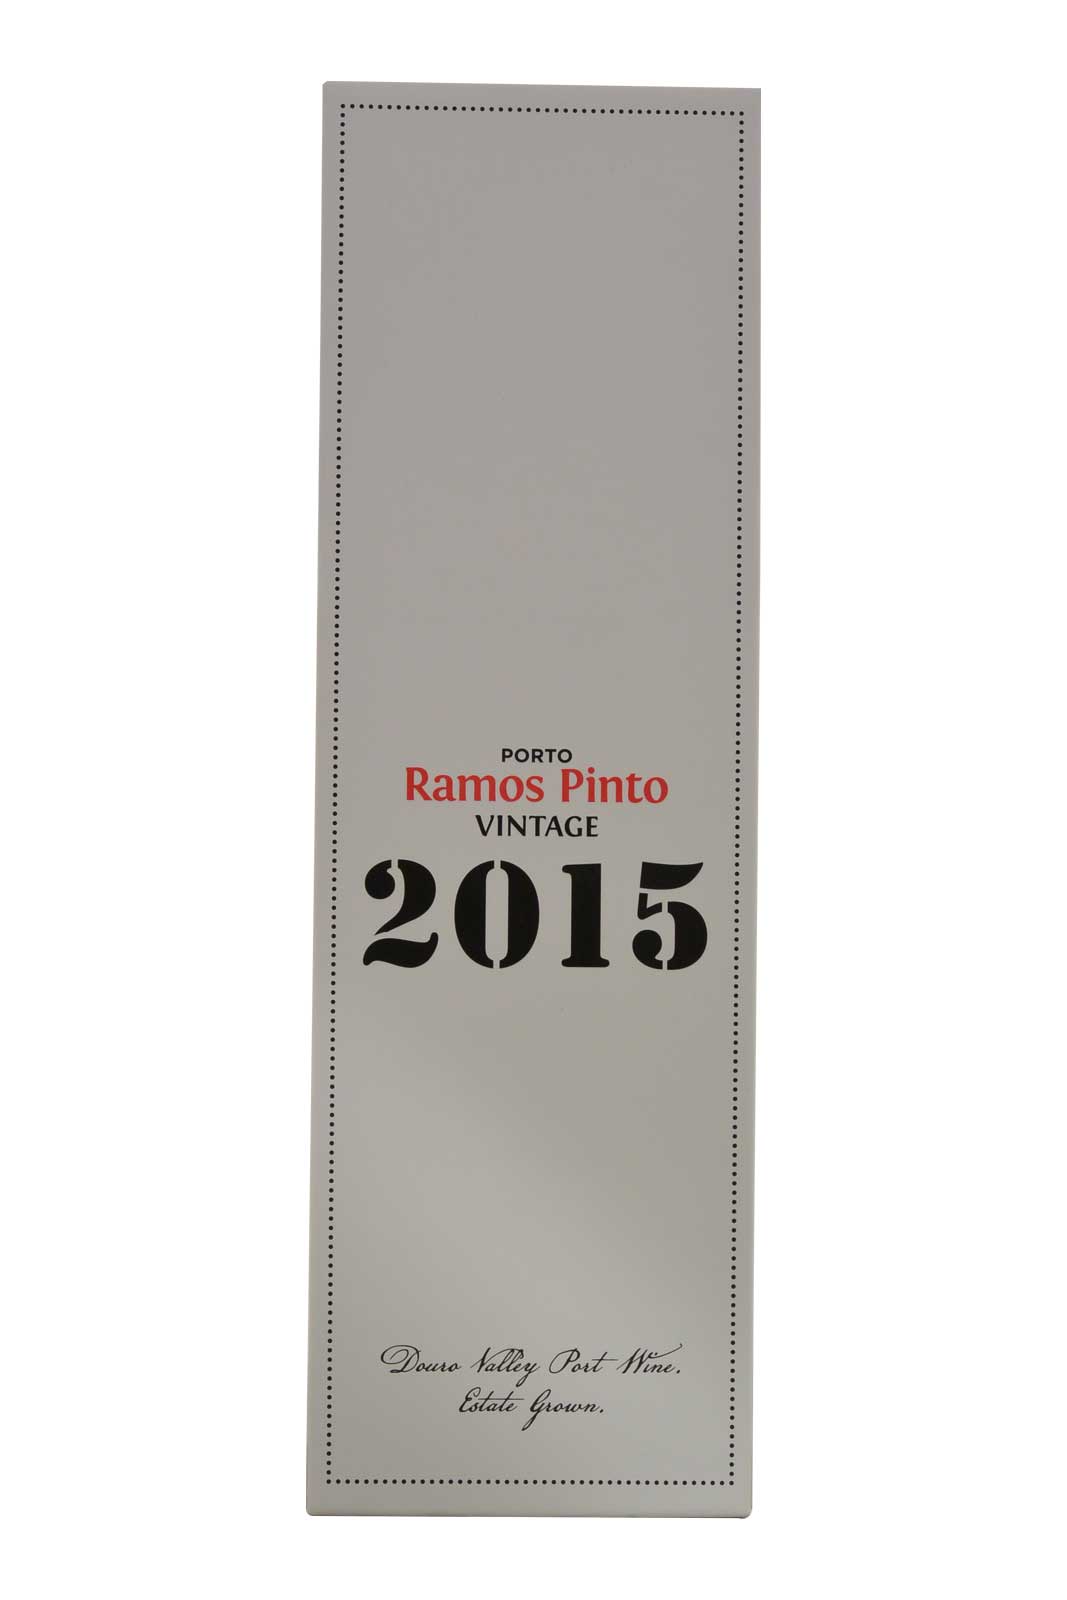 Ramos Pinto 2015 Vintage